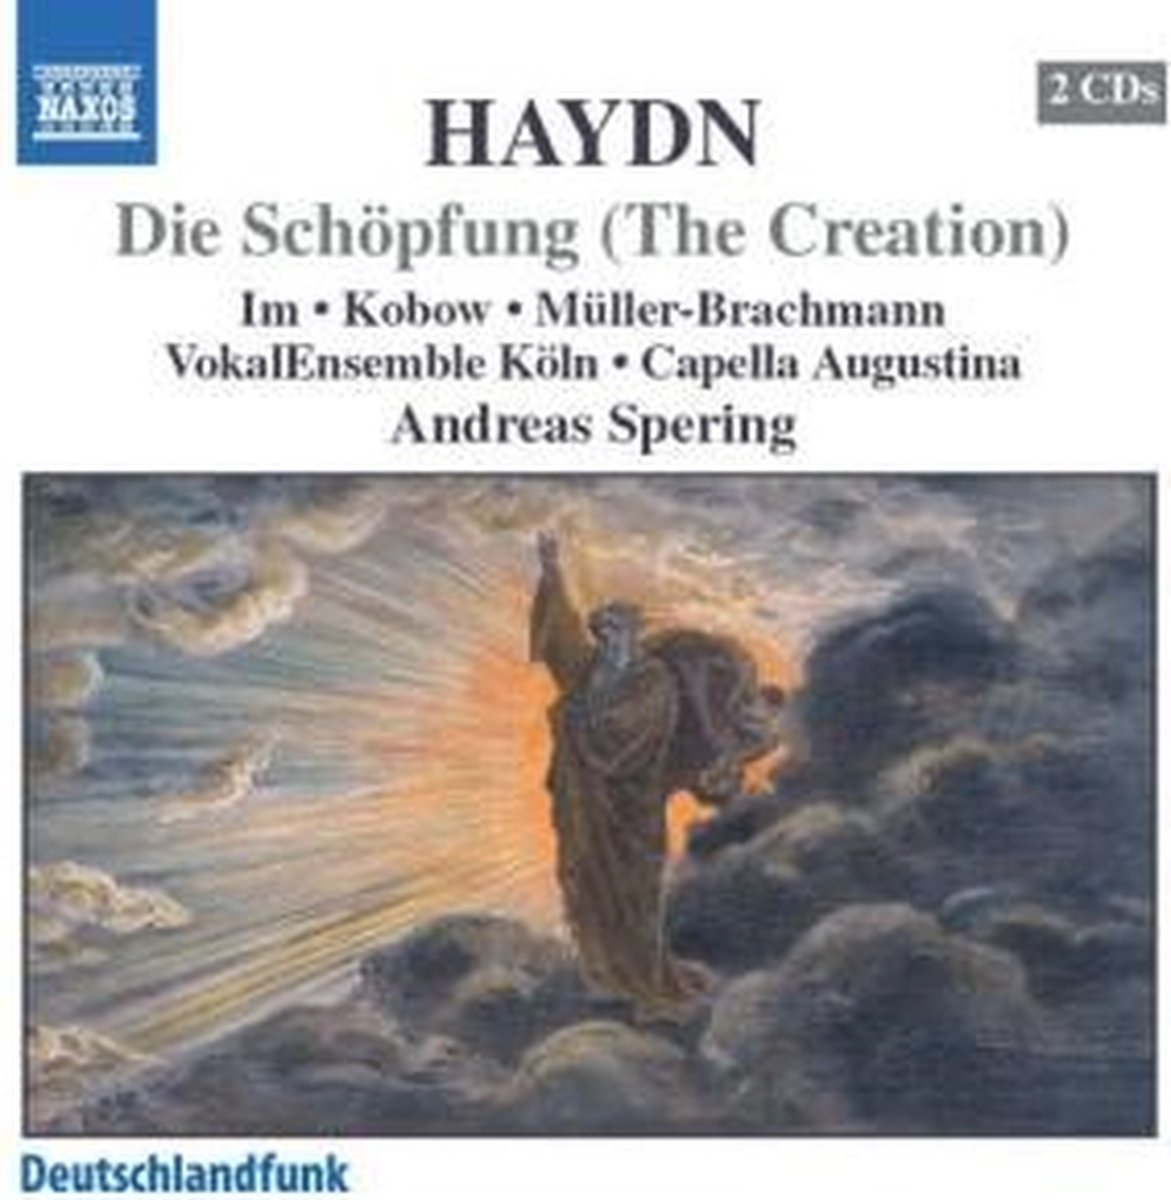 VokalEnsemble Köln, Capella Augustina, Andreas Spering - Haydn: The Creation (2 CD) - VokalEnsemble Köln, Capella Augustina, Andreas Spering